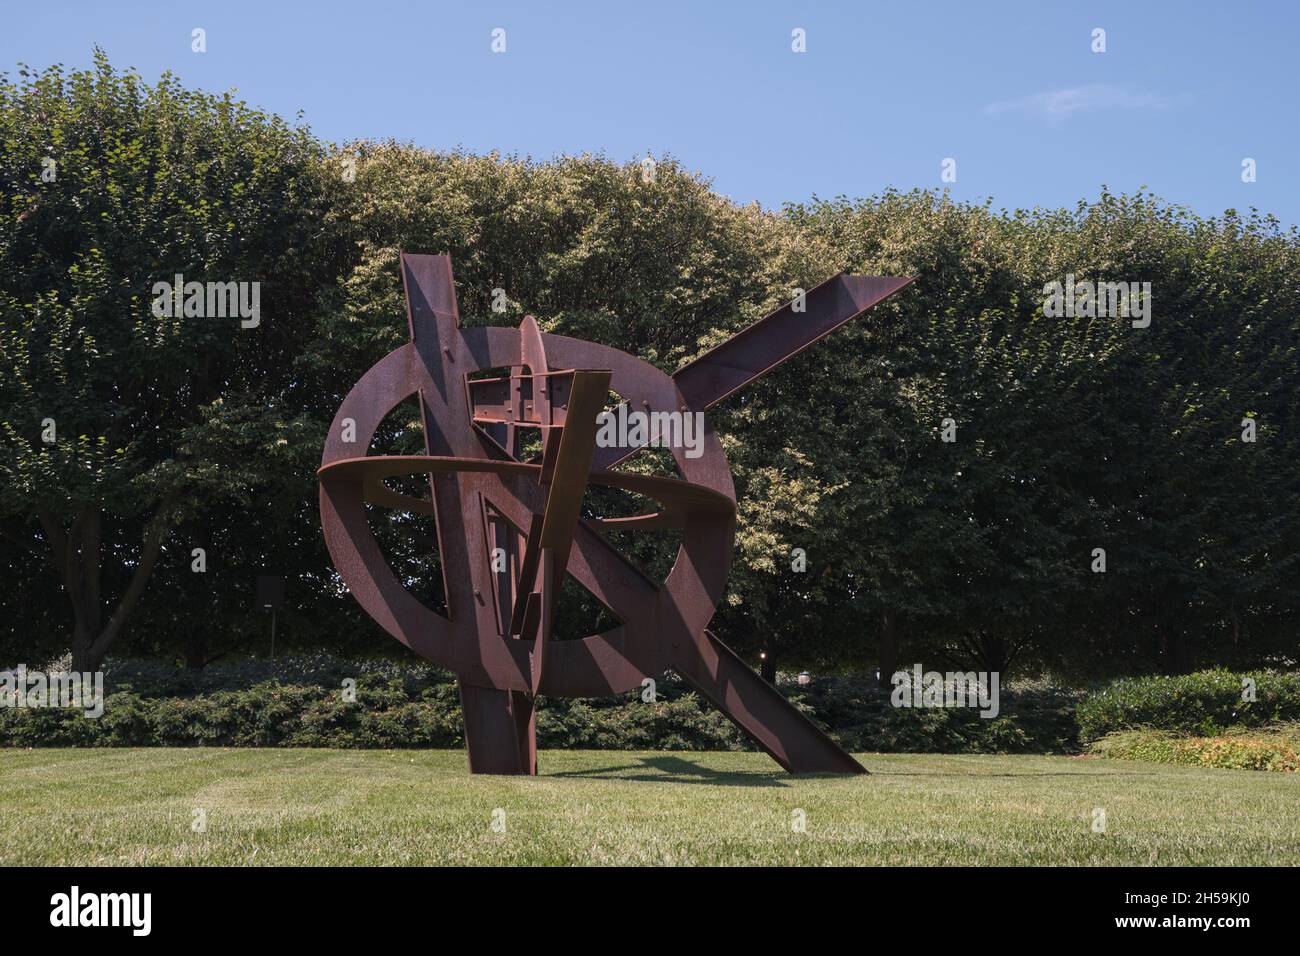 The Mark di Suvero rusty steel sculpture, Aurora. At the National Gallery of Art sculpture garden in Washington DC. Stock Photo